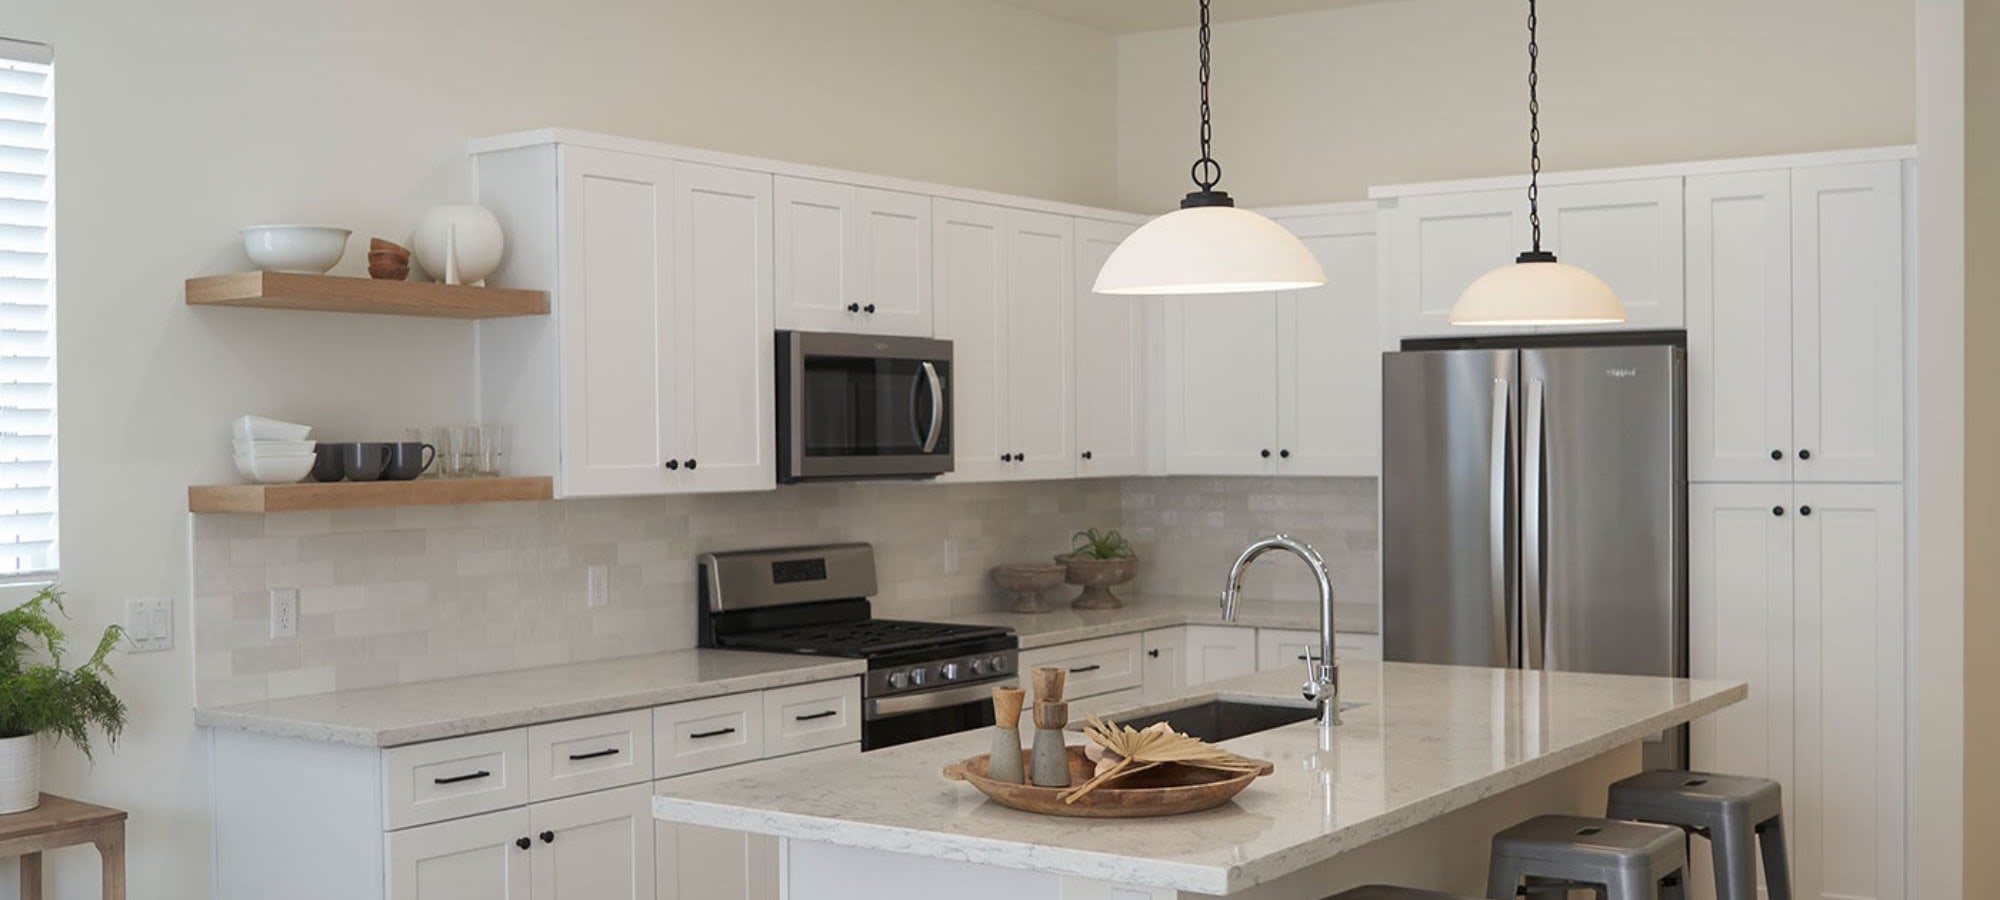 Kitchen area featuring modern and sleek appliances at Novella at Biltmore in Phoenix, Arizona